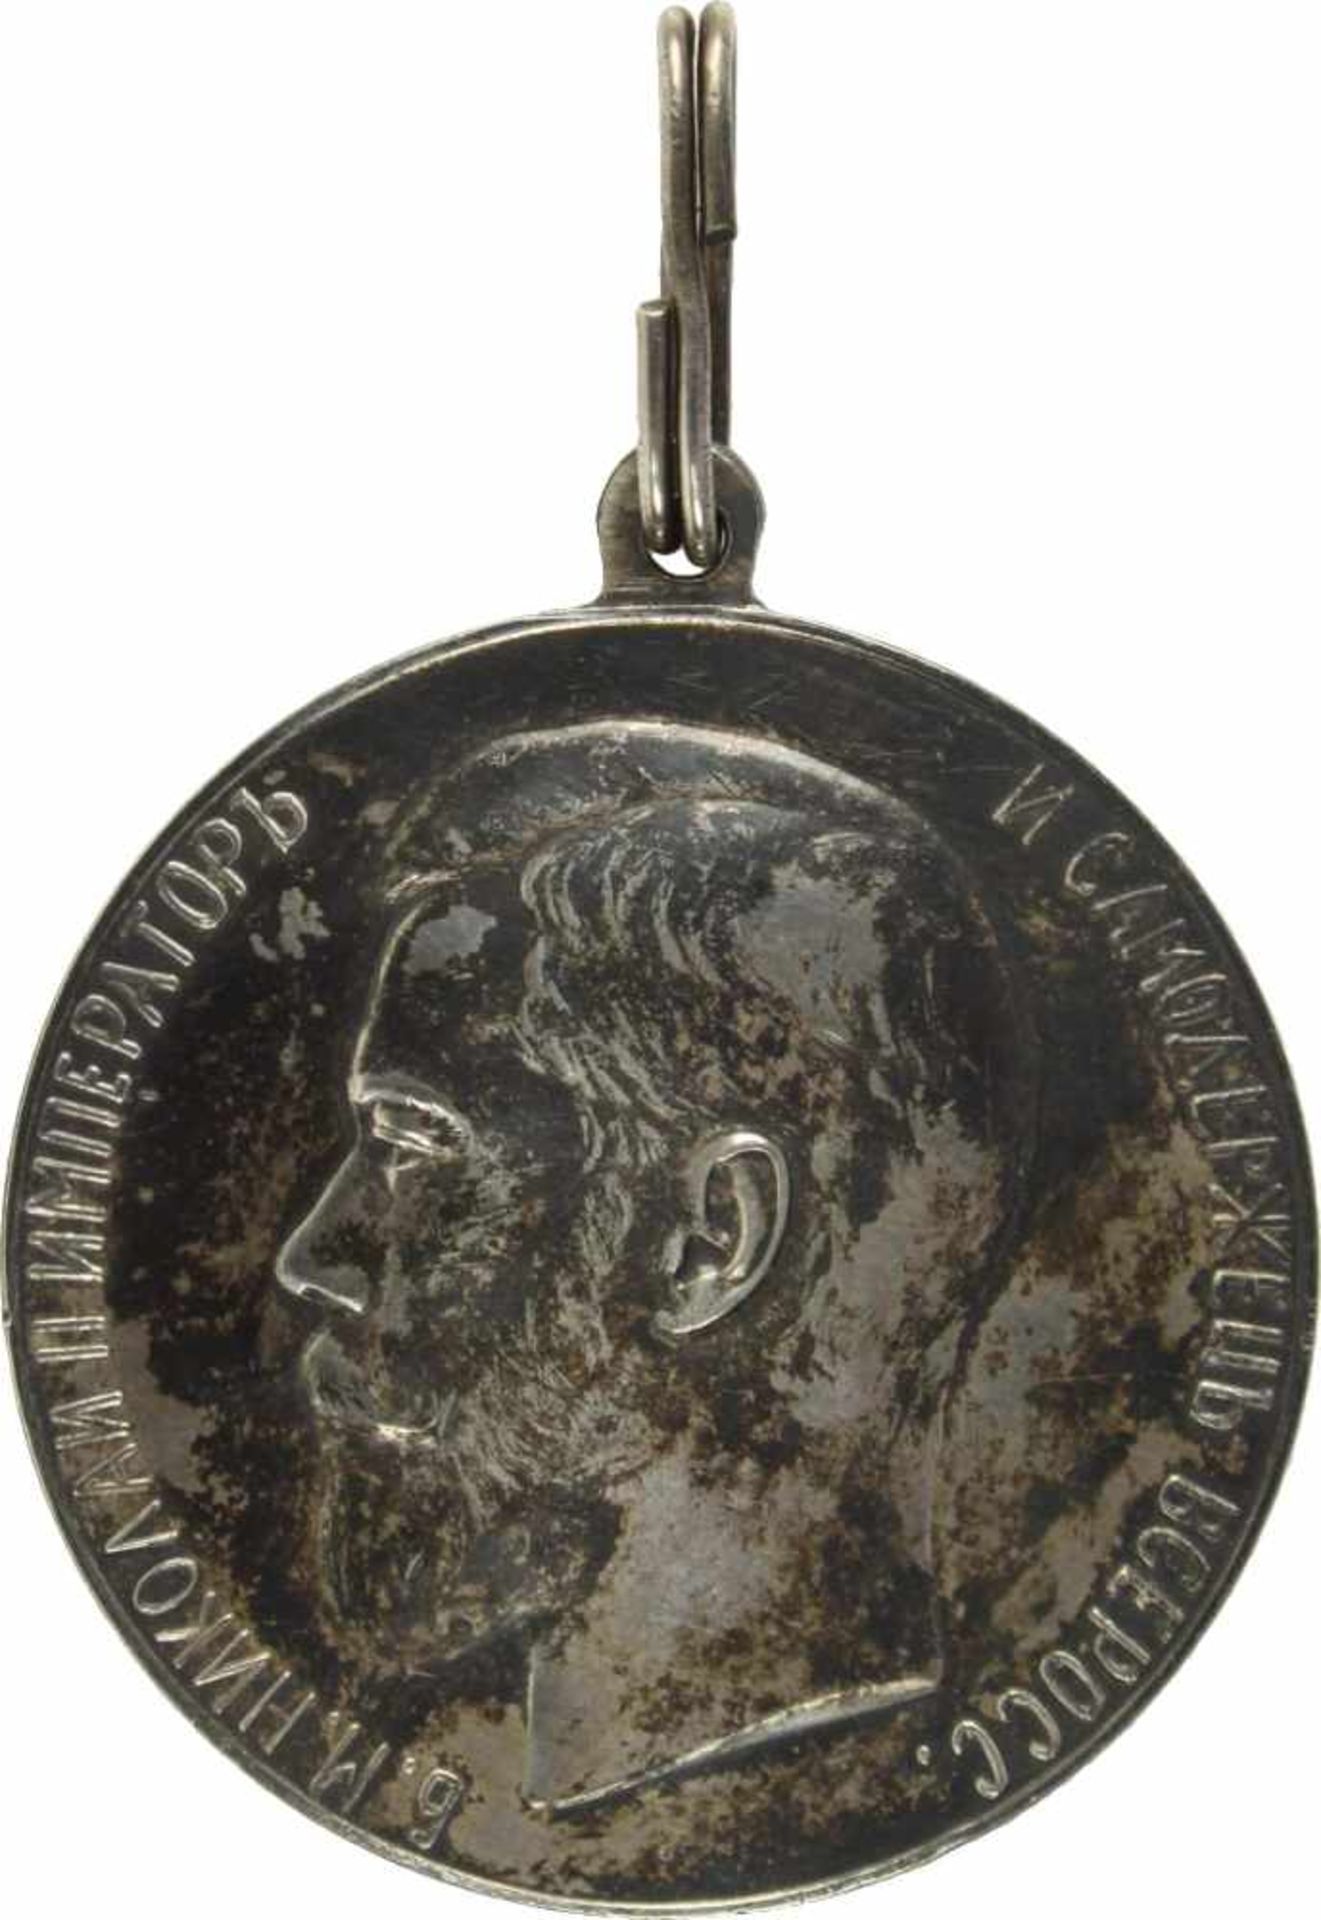 Große Silberne Medaillefür Eifer Zar Nikolaus II., Silber geprägt, 50mm, AlterspatinaII